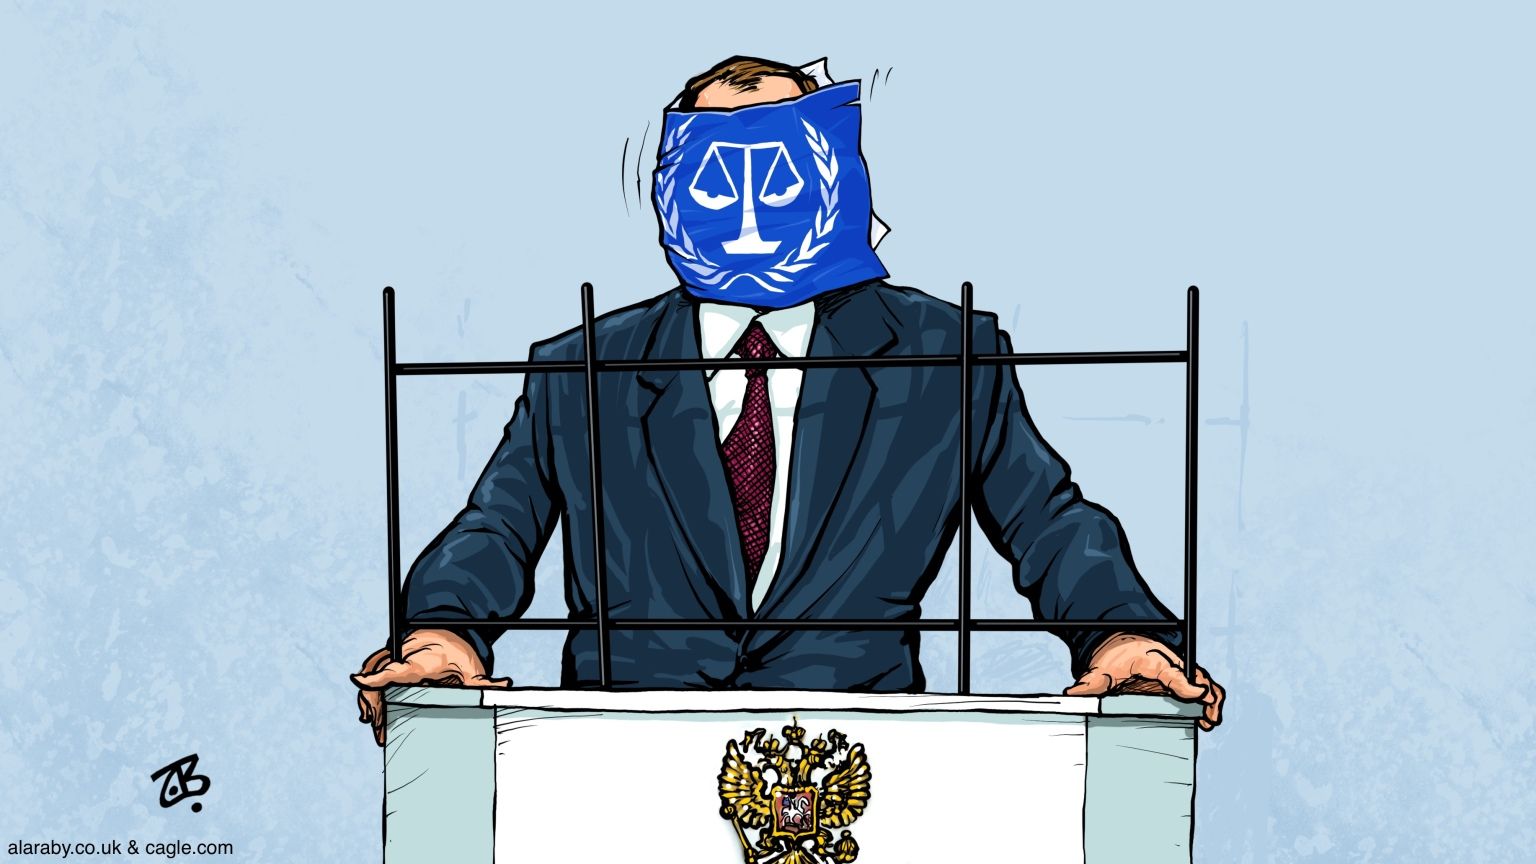 newsjustin.press - Putin wanted by International Criminal Court - editorial political cartoon